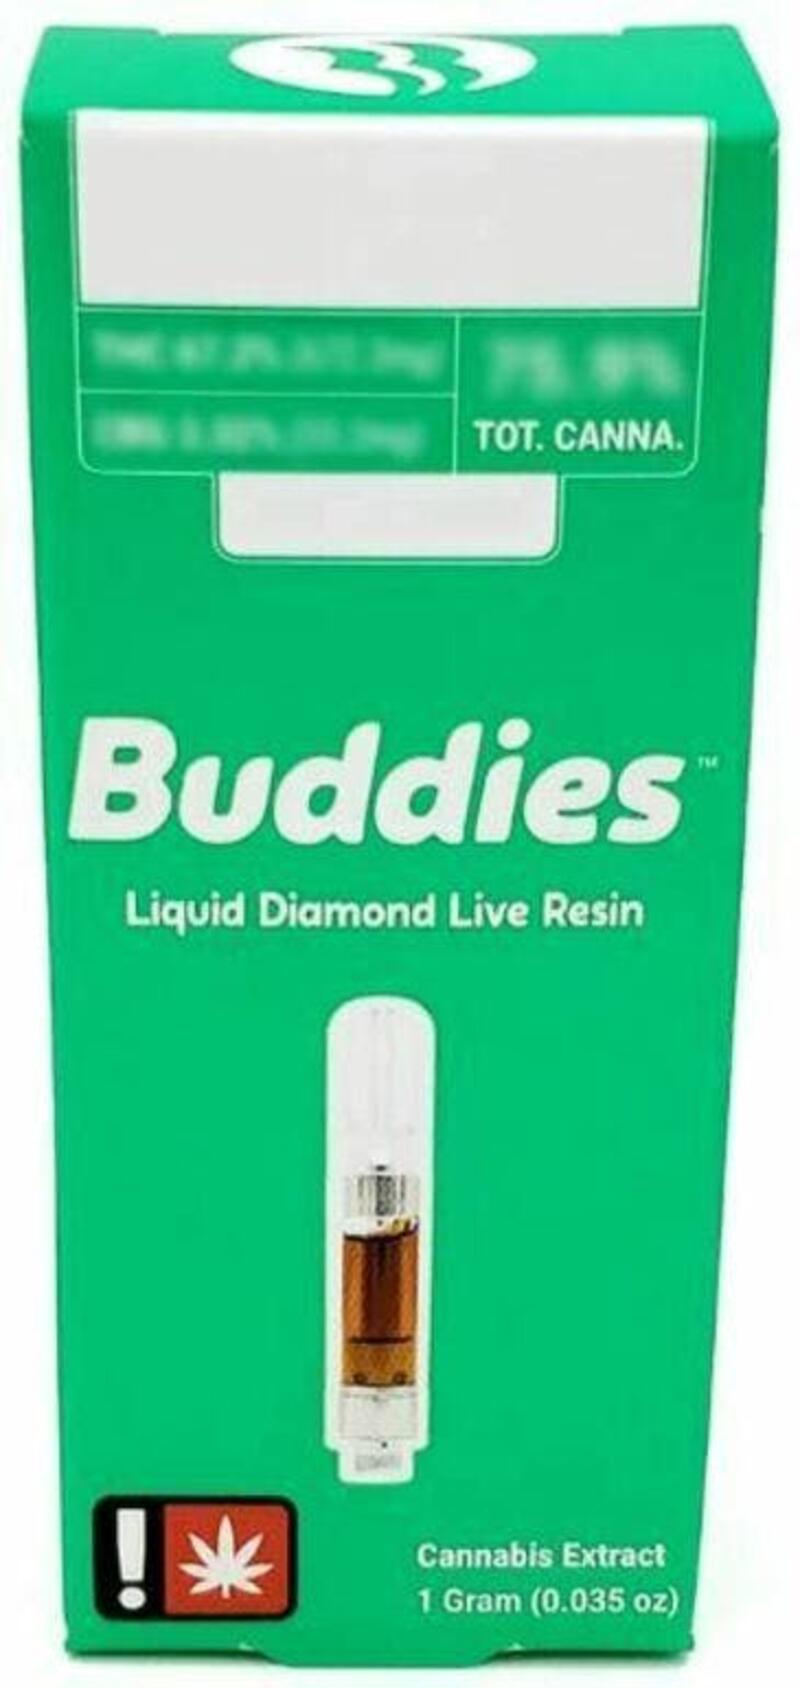 Buddies Liquid Diamonds Live Resin Cart 1g (H) Kush Mints